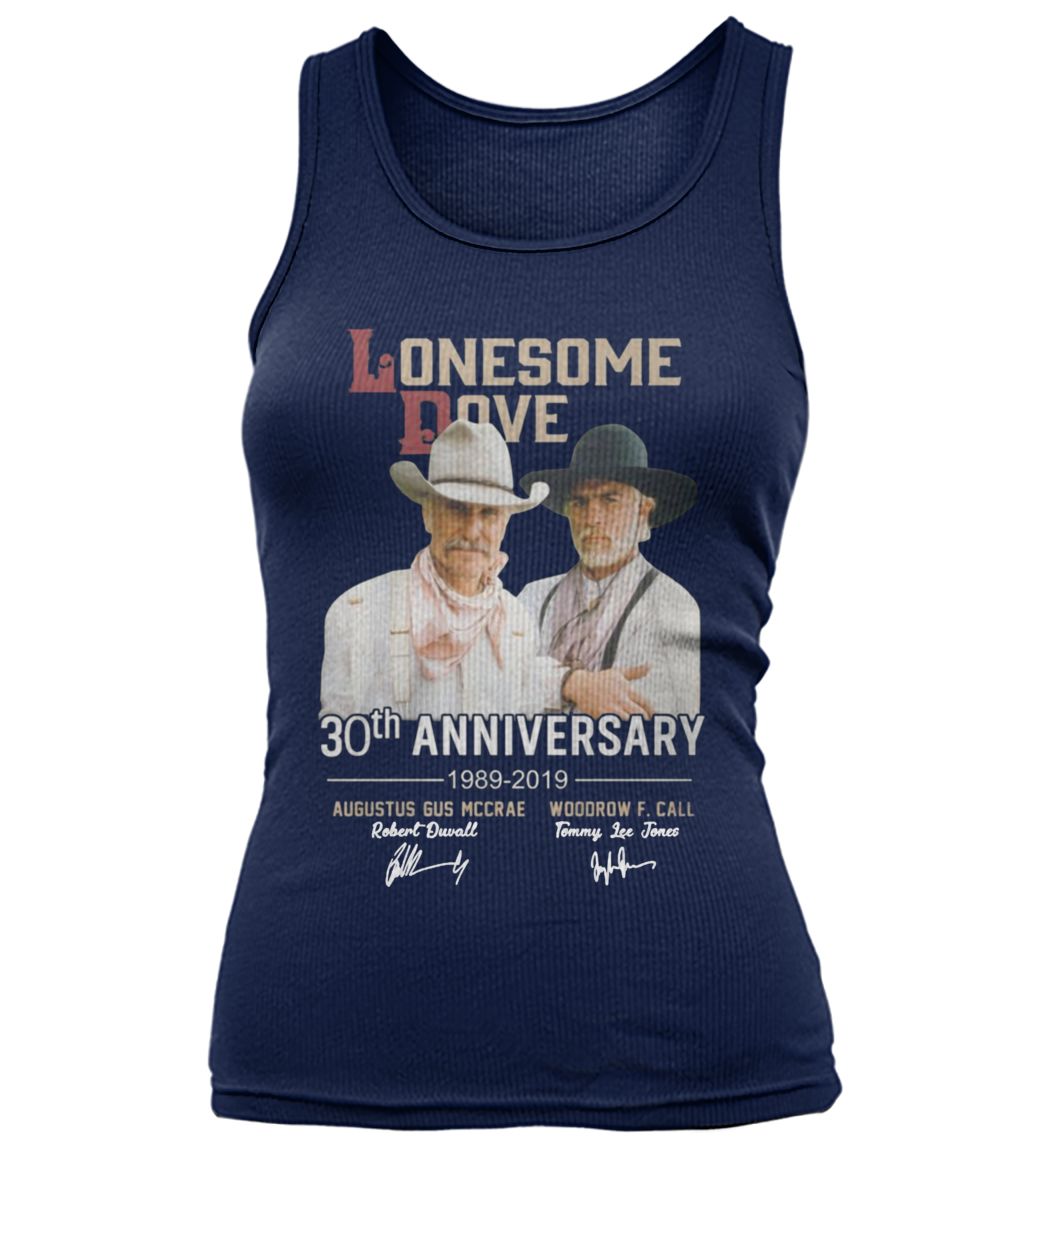 Lonesome dove 30th anniversary 1989-2019 signatures women's tank top